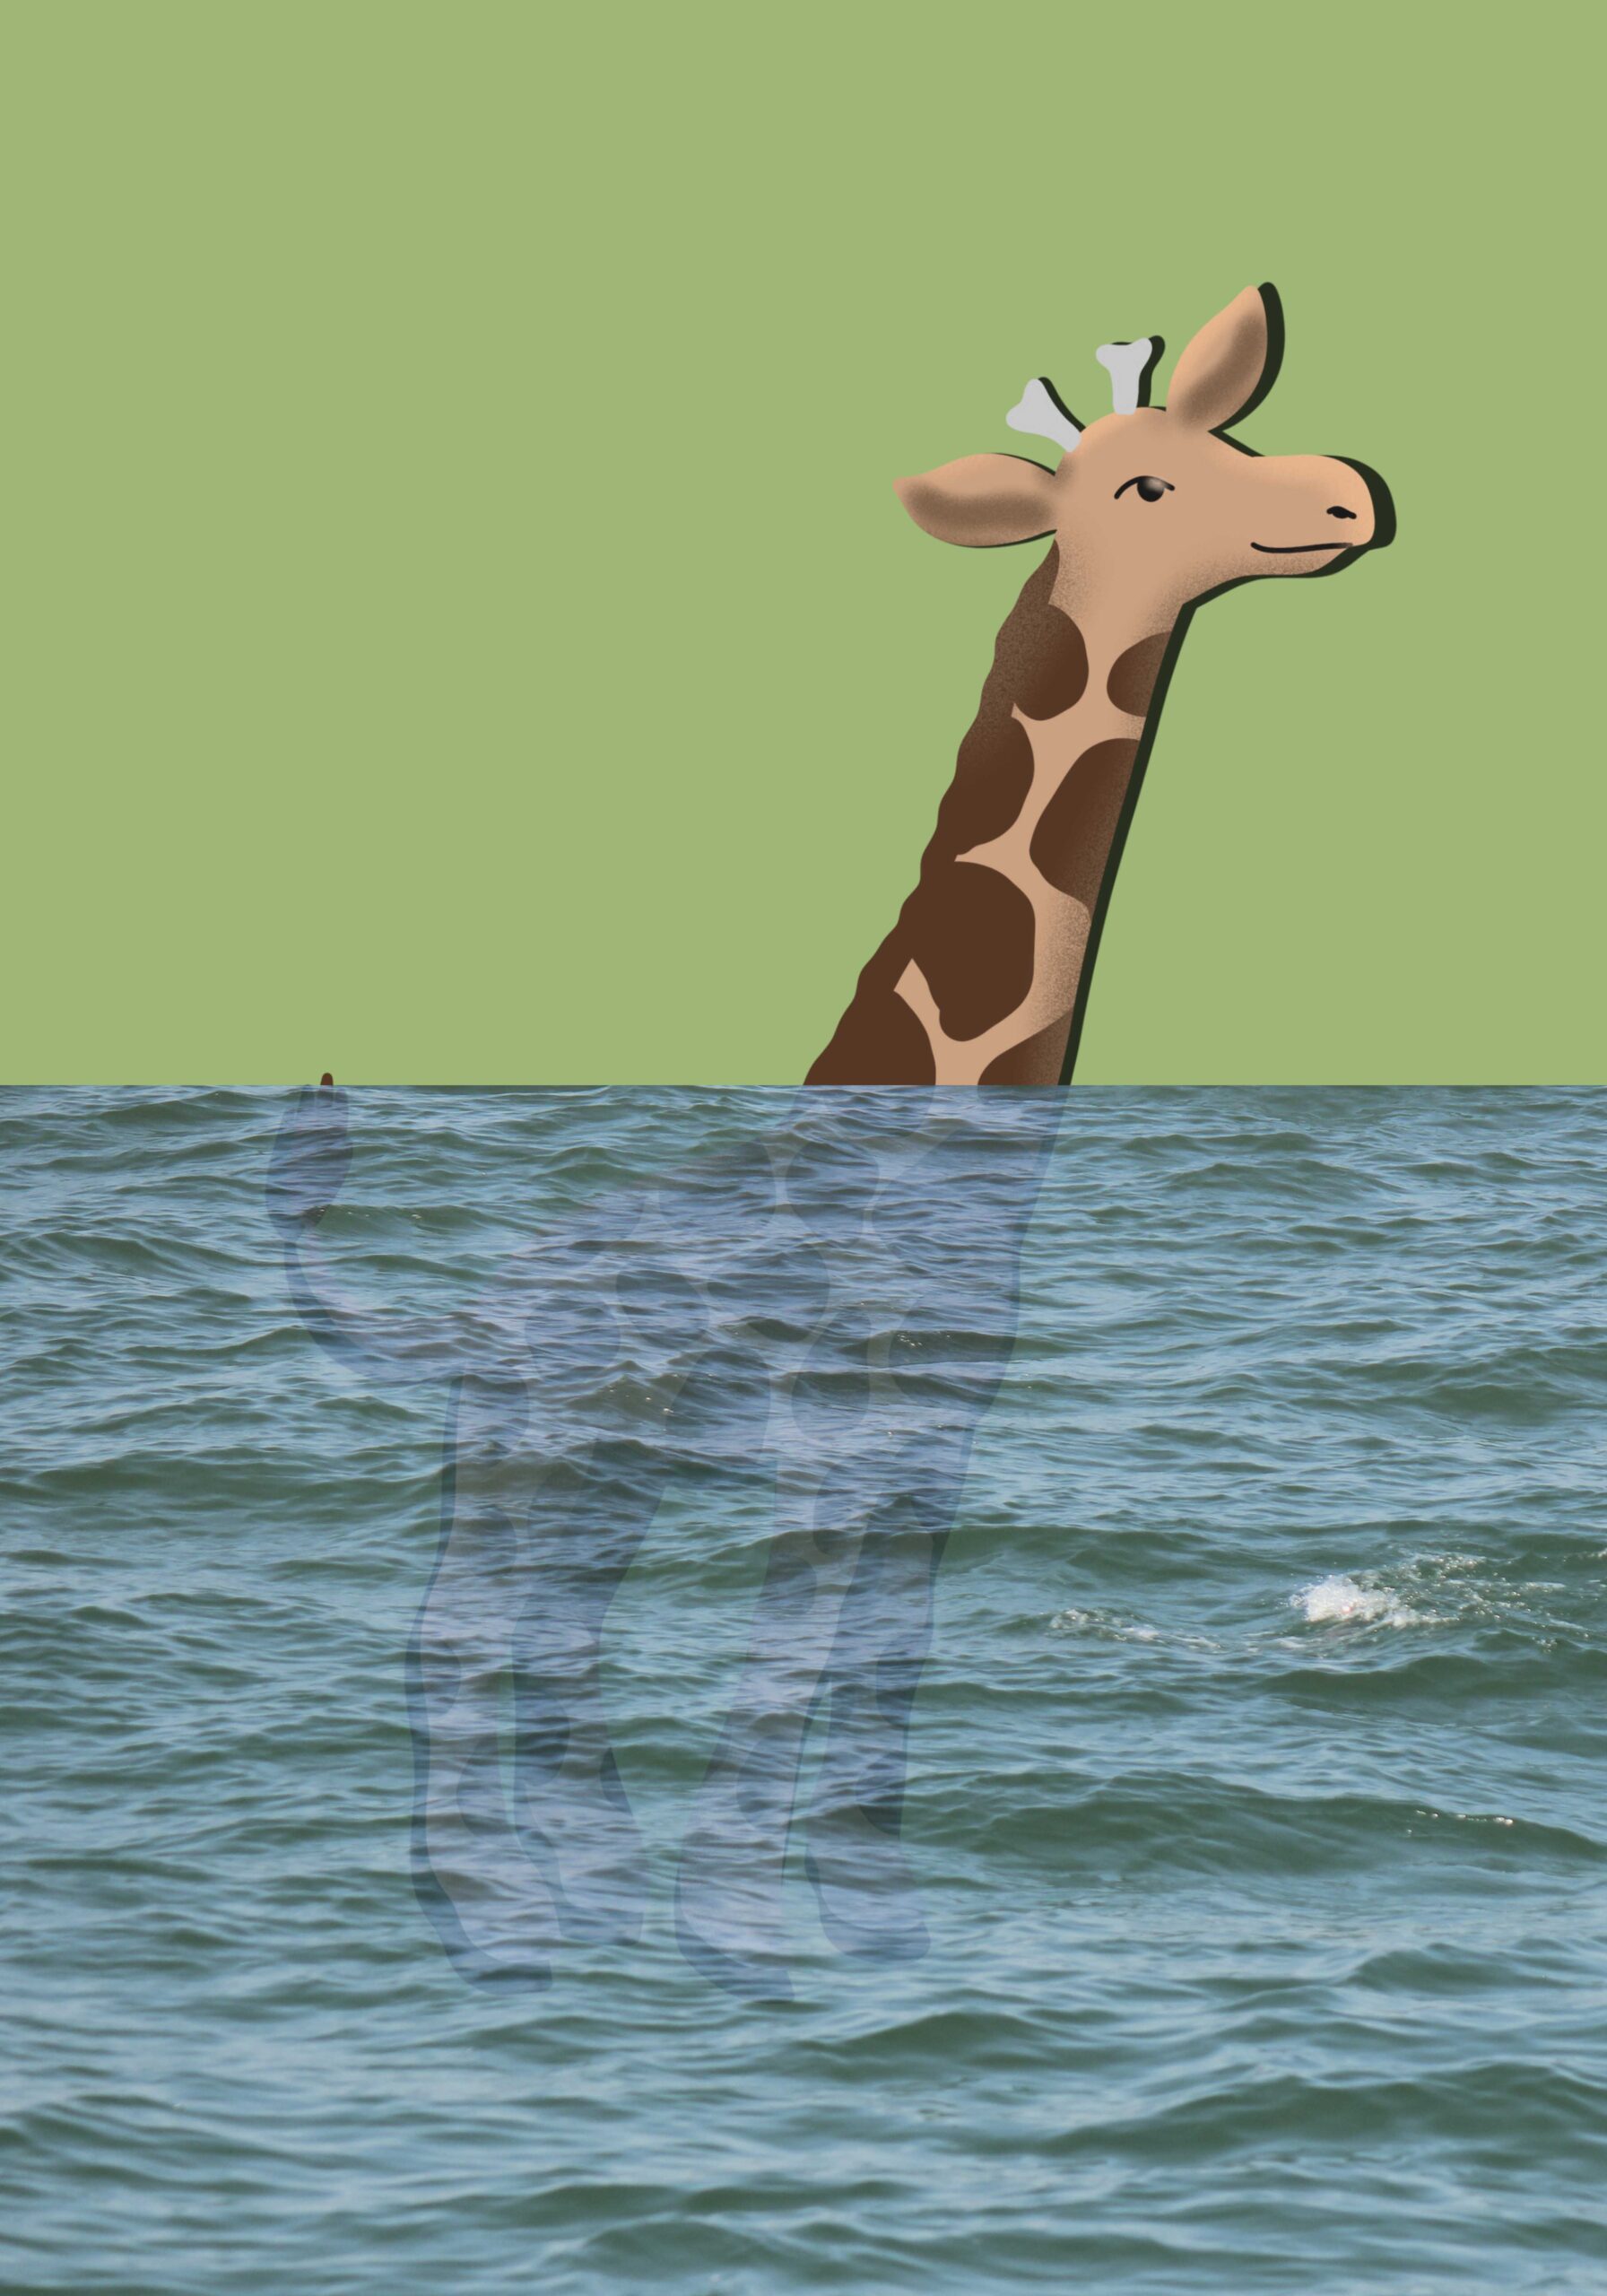 Can giraffes swim?